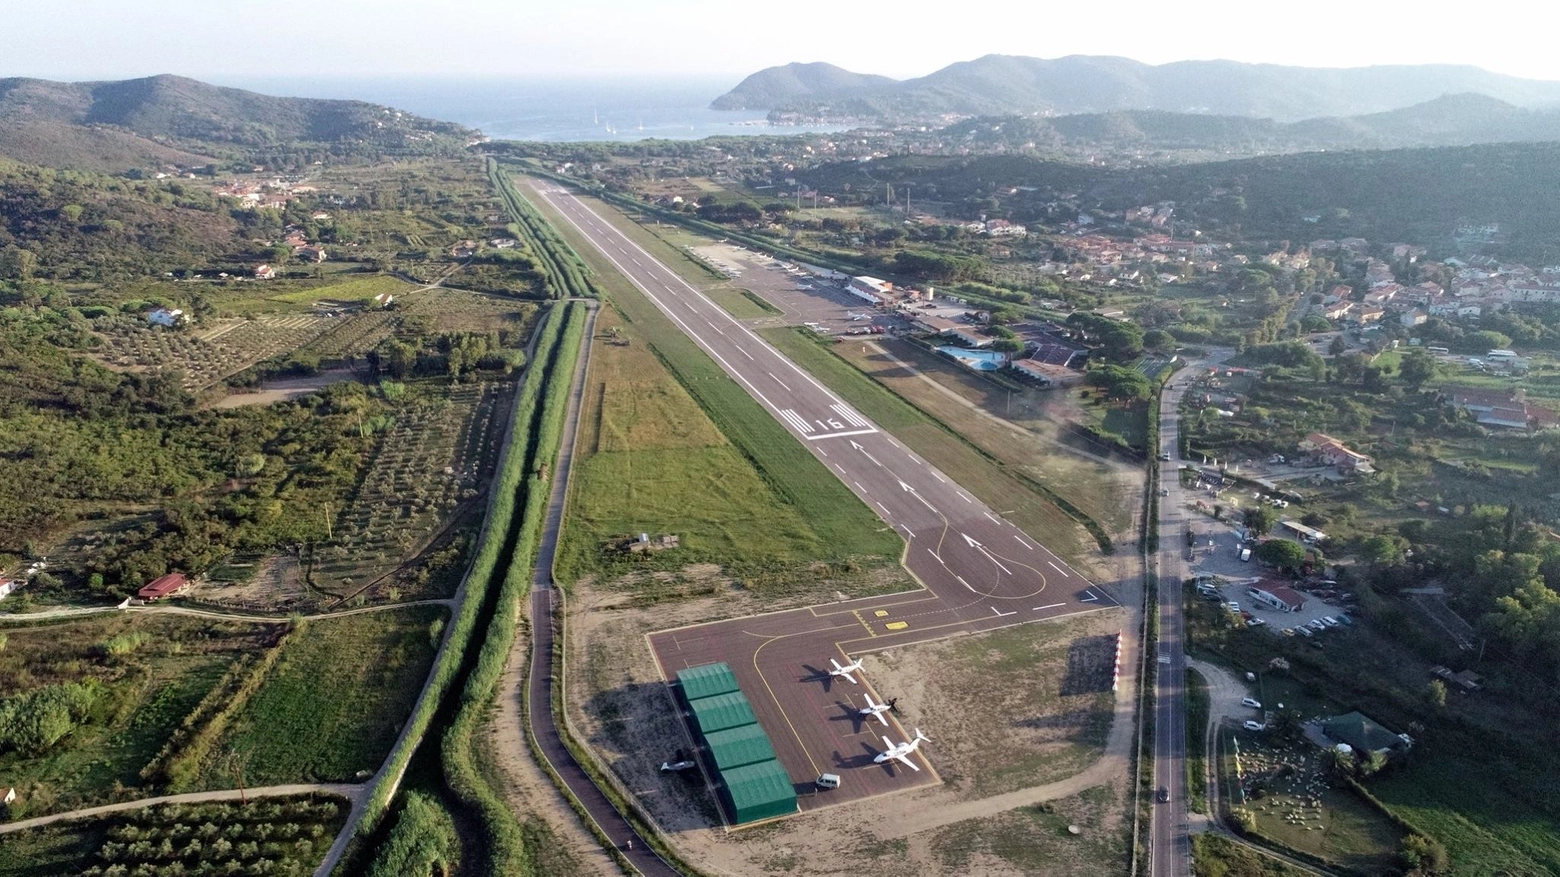 La pista dell'aeroporto dell'isola d'Elba (foto dalla pagina Facebook Aeroporto Elba)